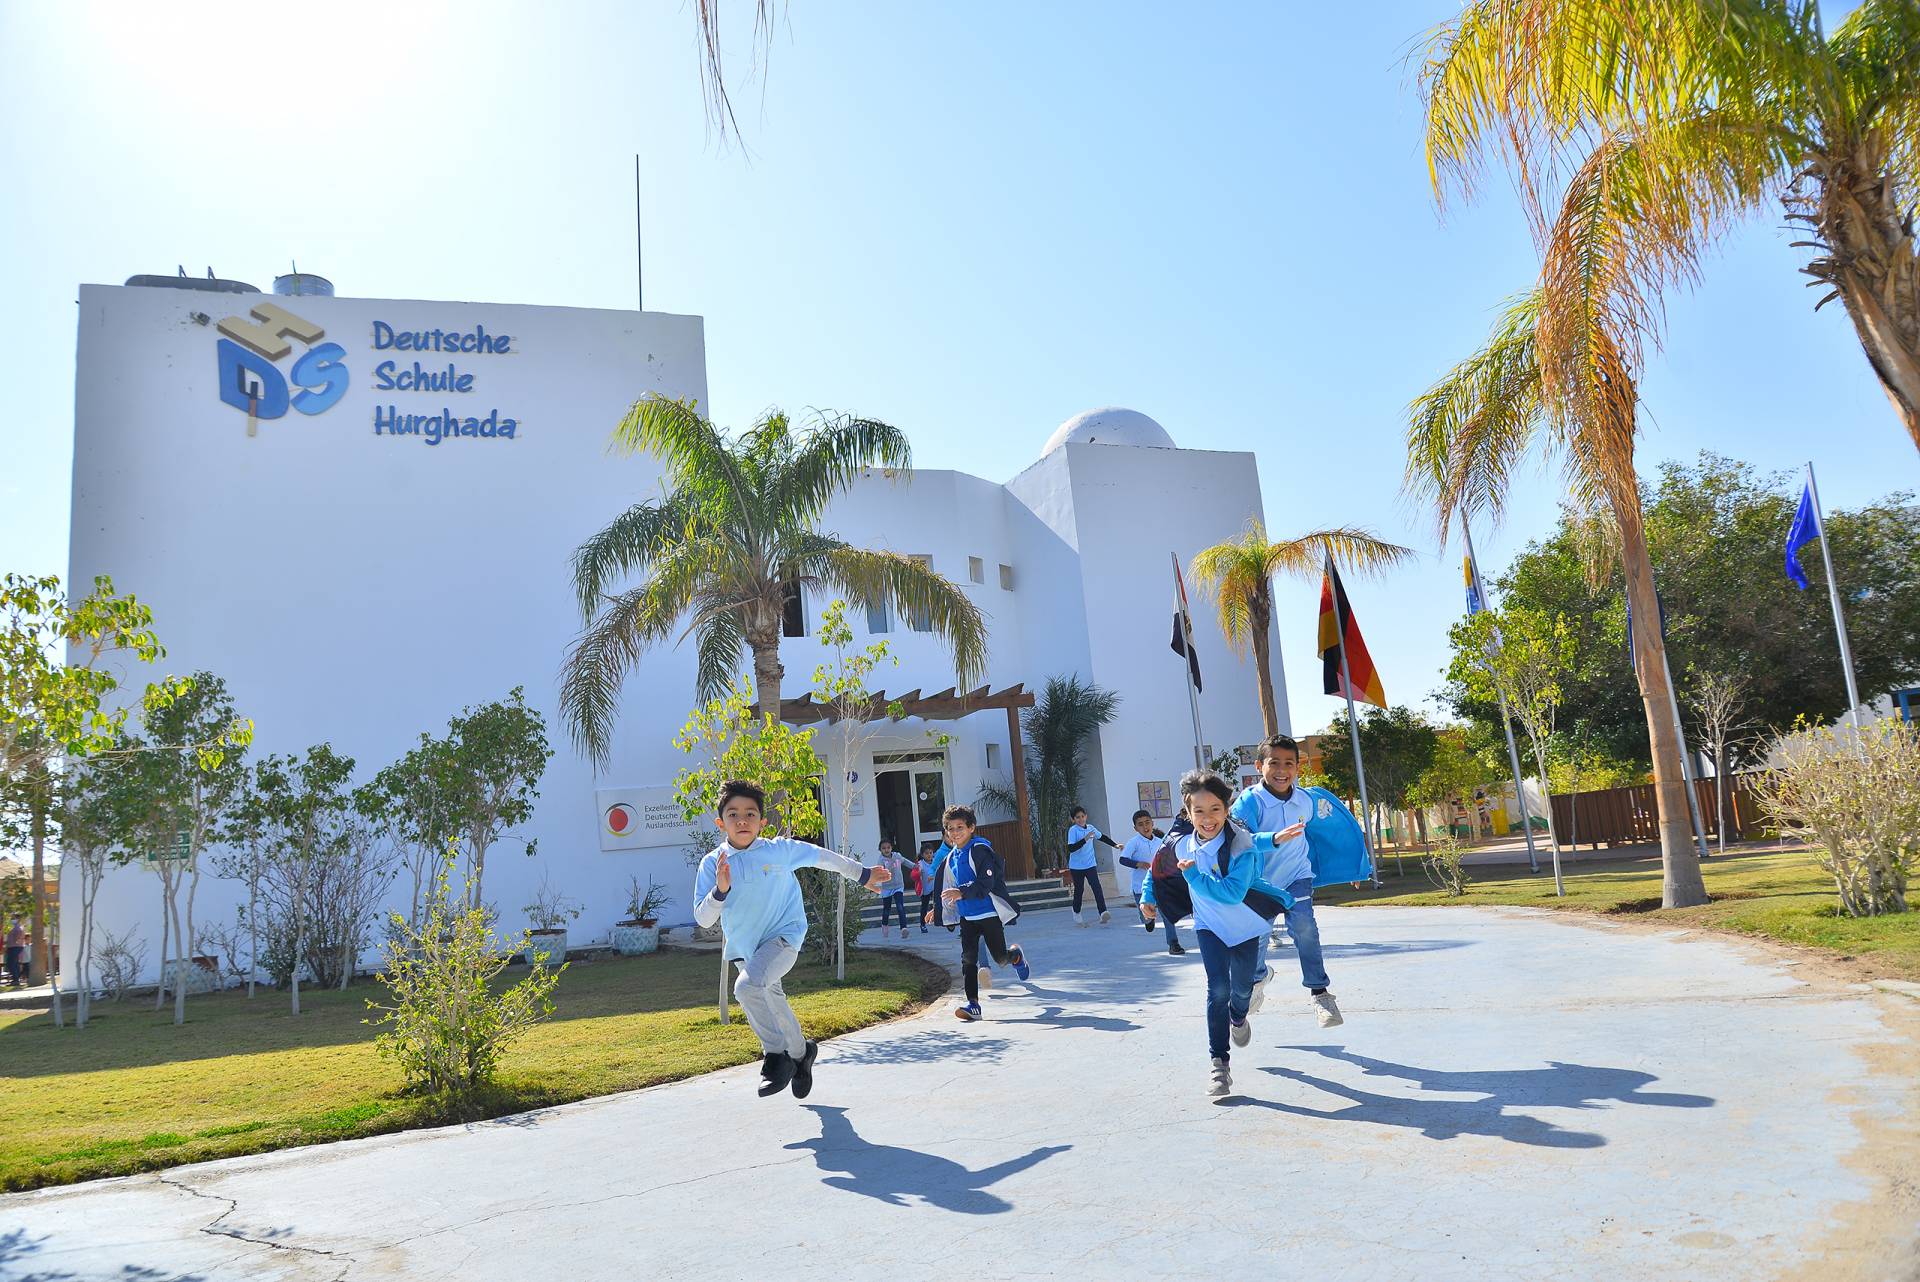 Deutsche Schule Hurghada